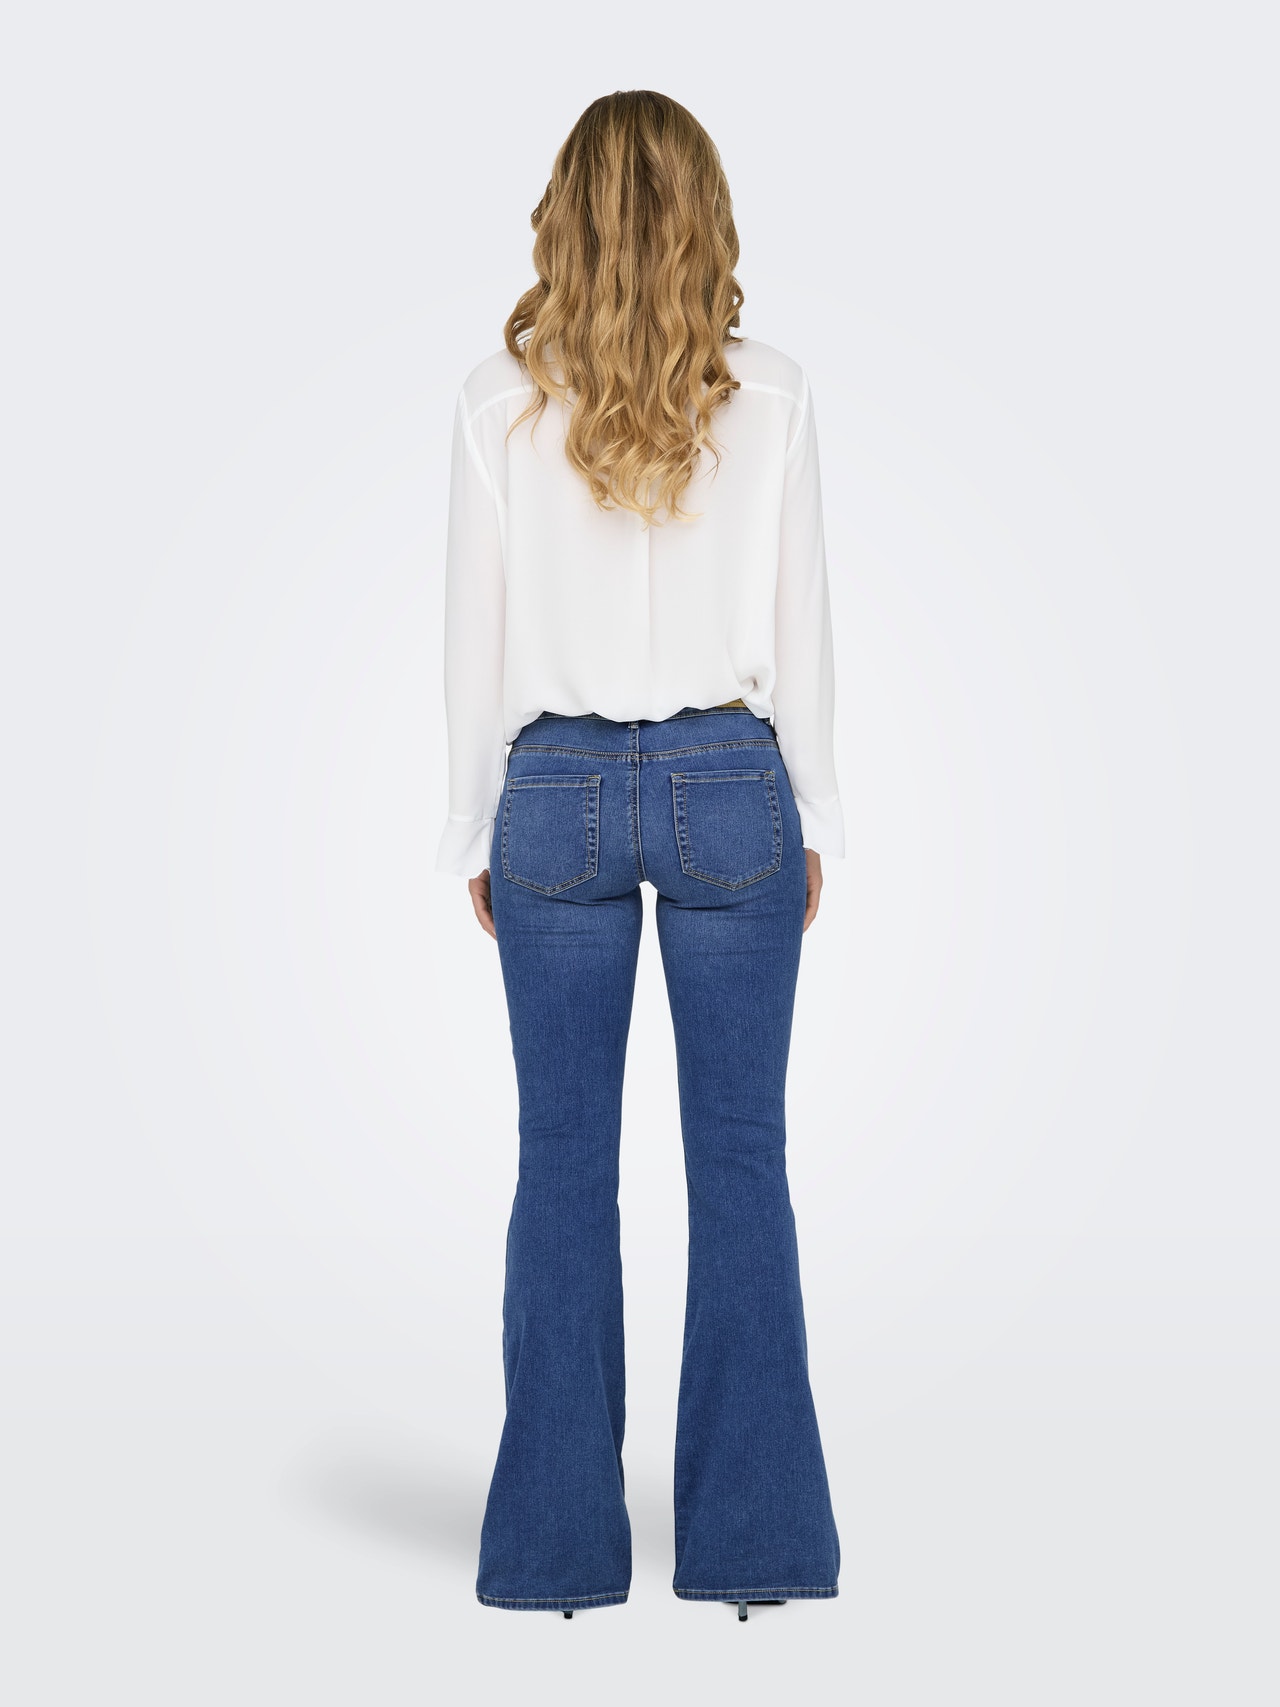 Flared Fit Mid waist Jeans, Medium Blue